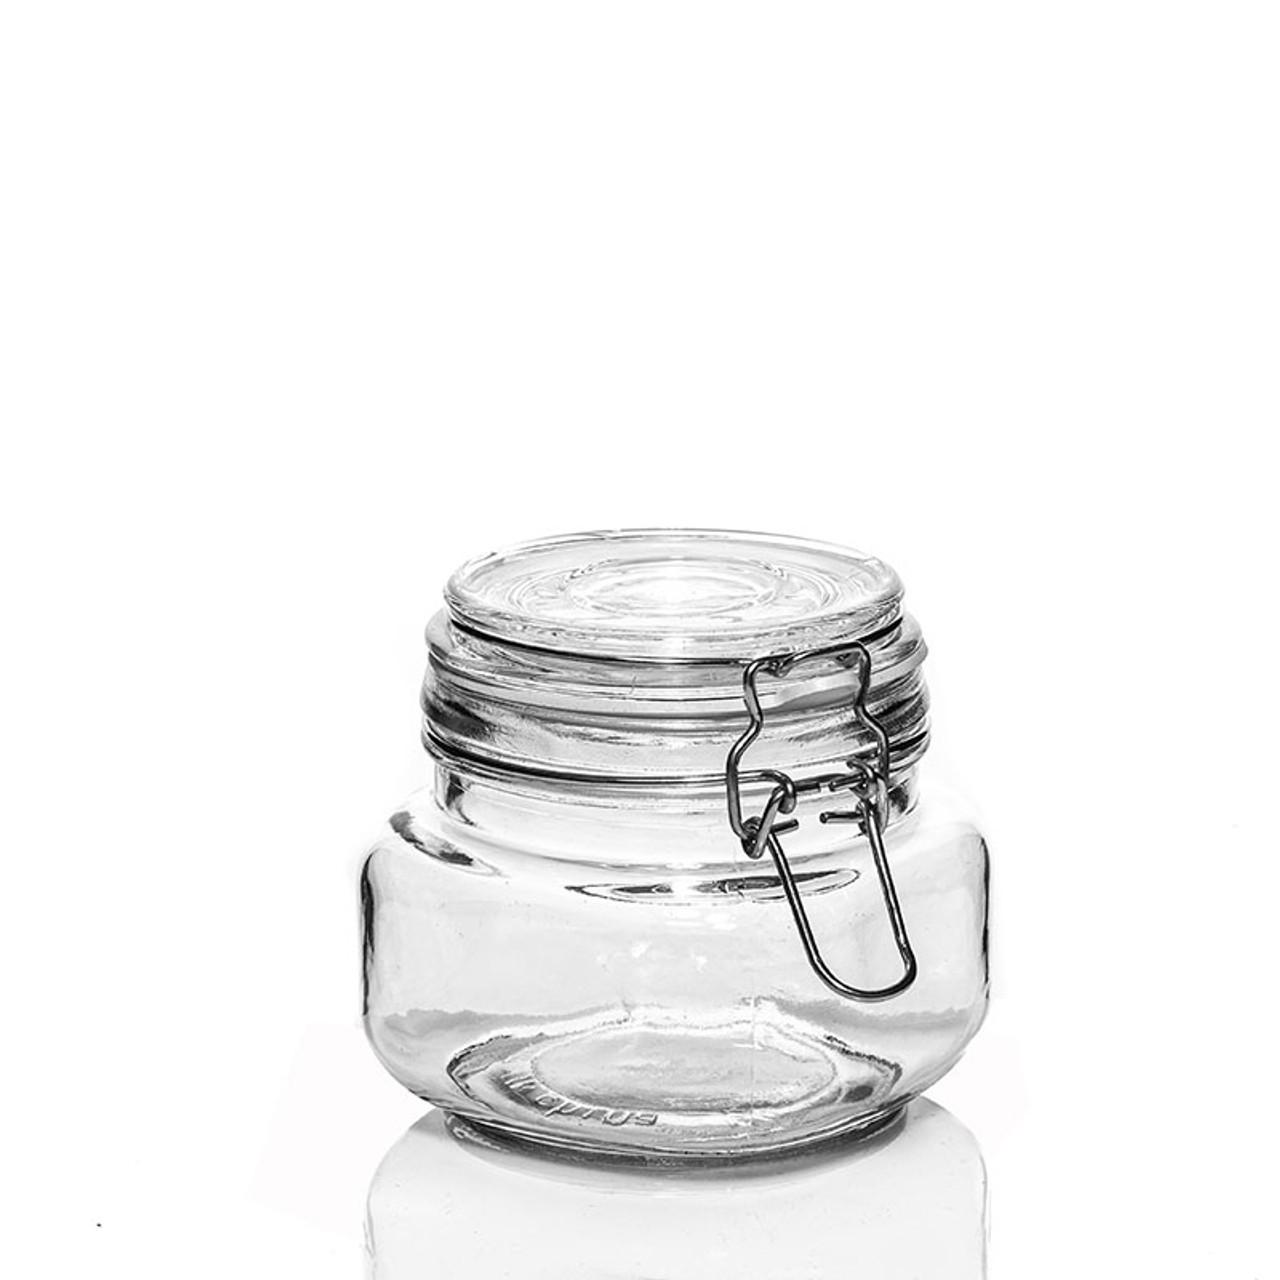 Hermes Jar - Clamp Top Lid 106 oz. - Anchor Hocking